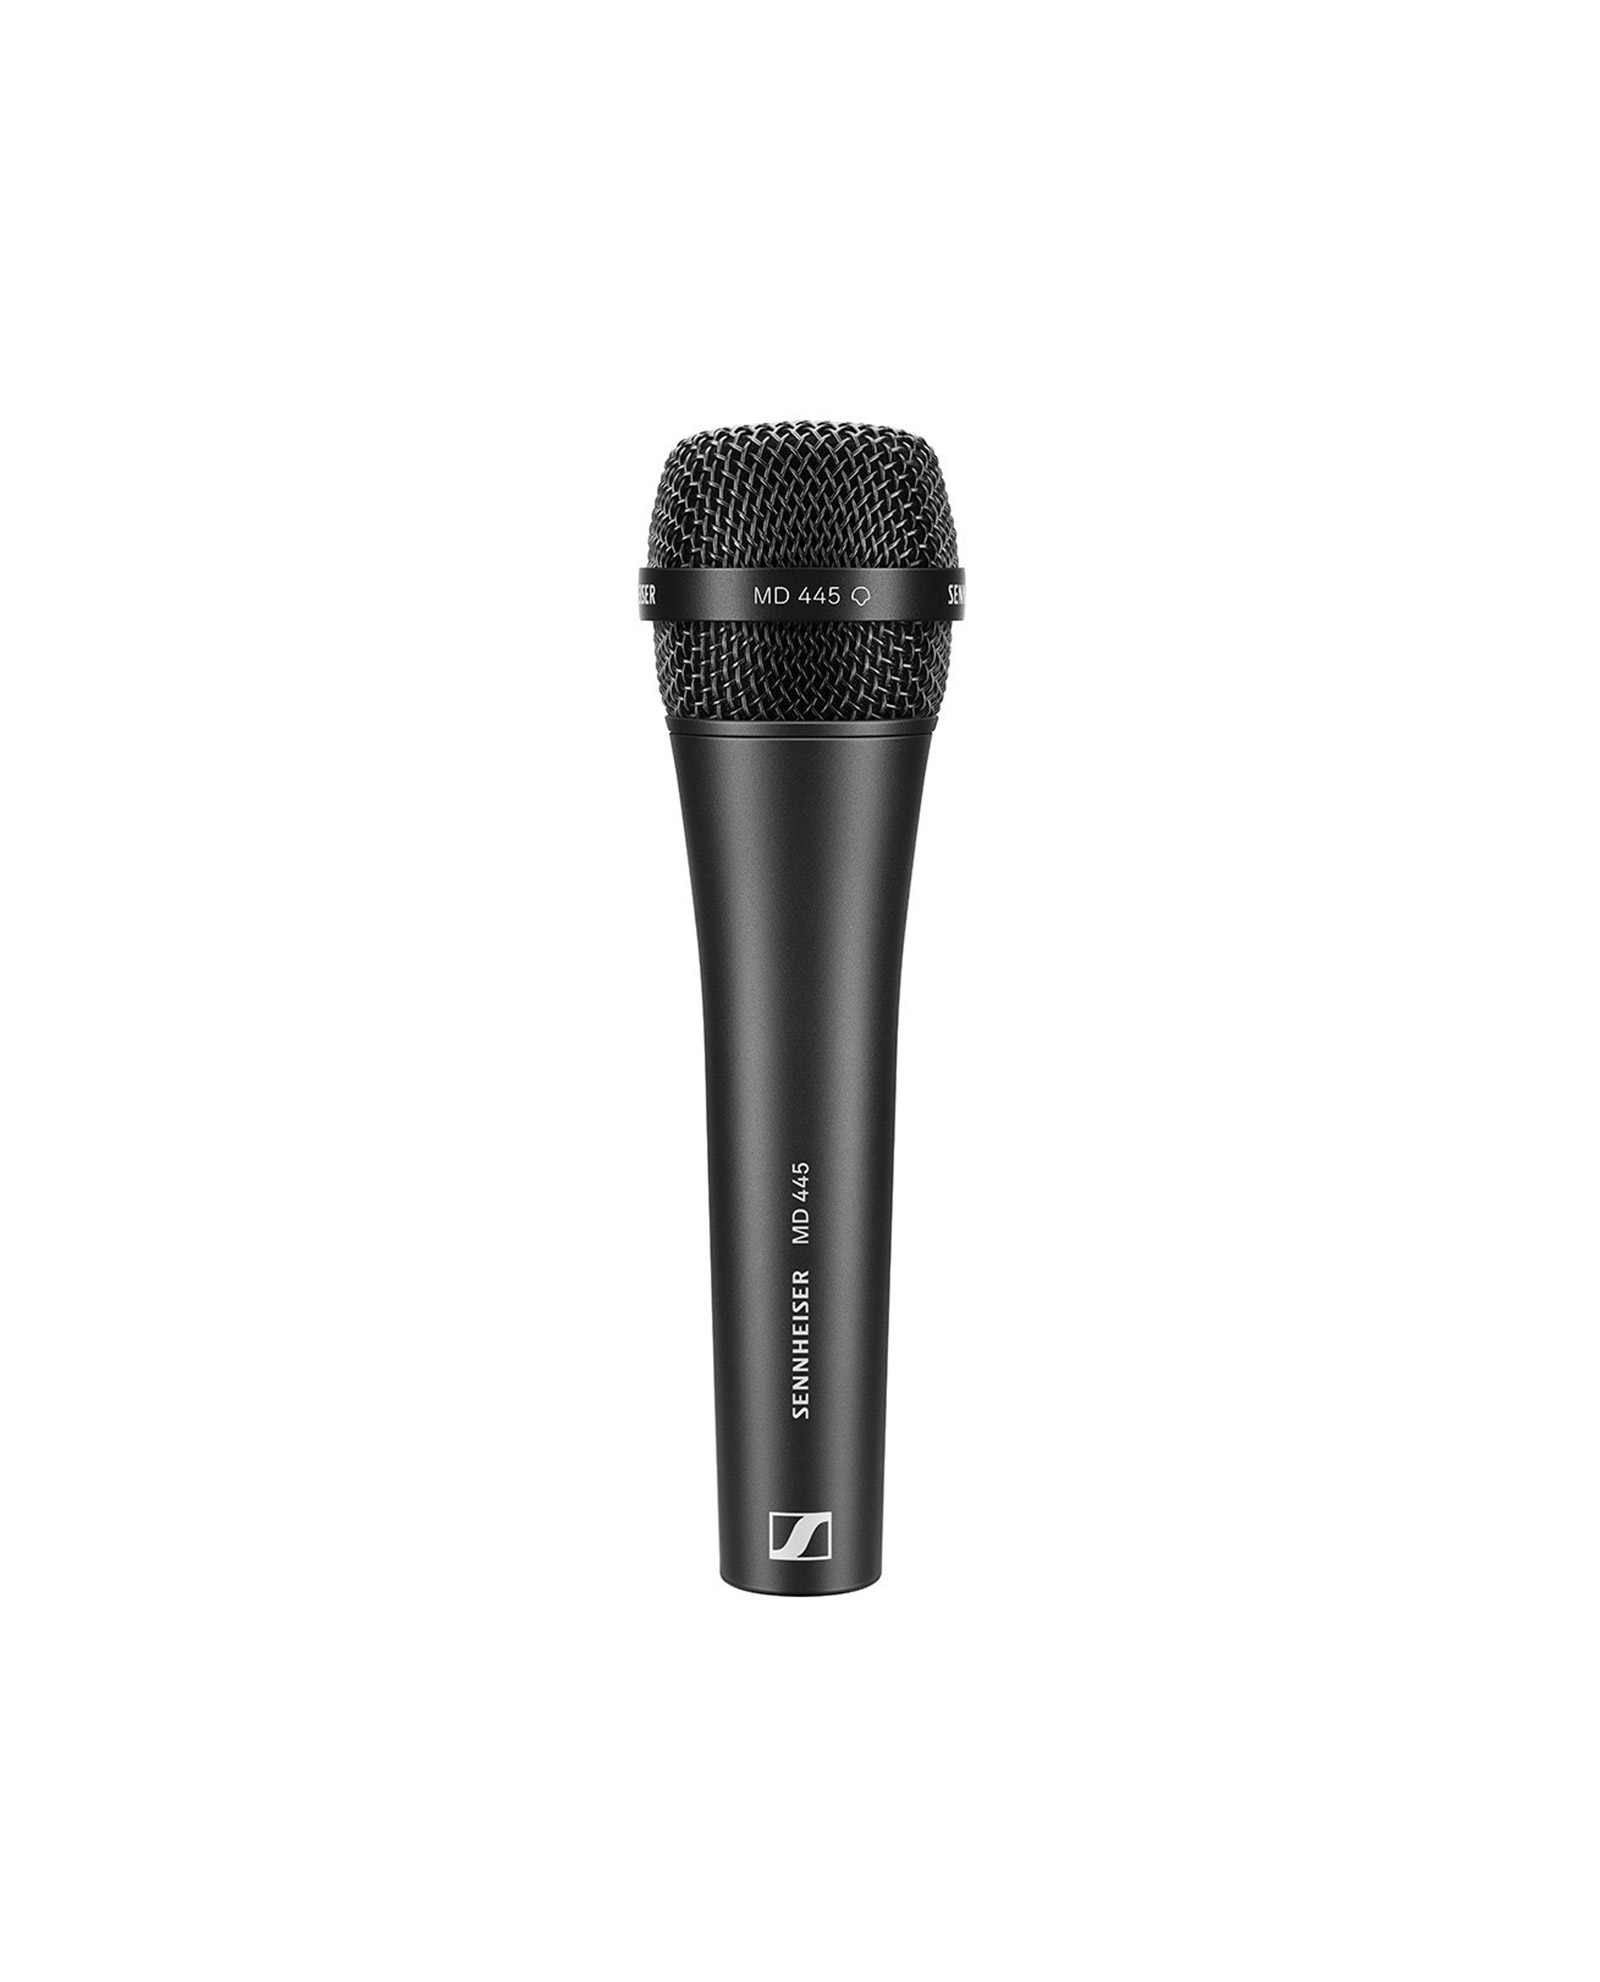 Sennheiser Md 445 Dynamic Vocal Microphone 1